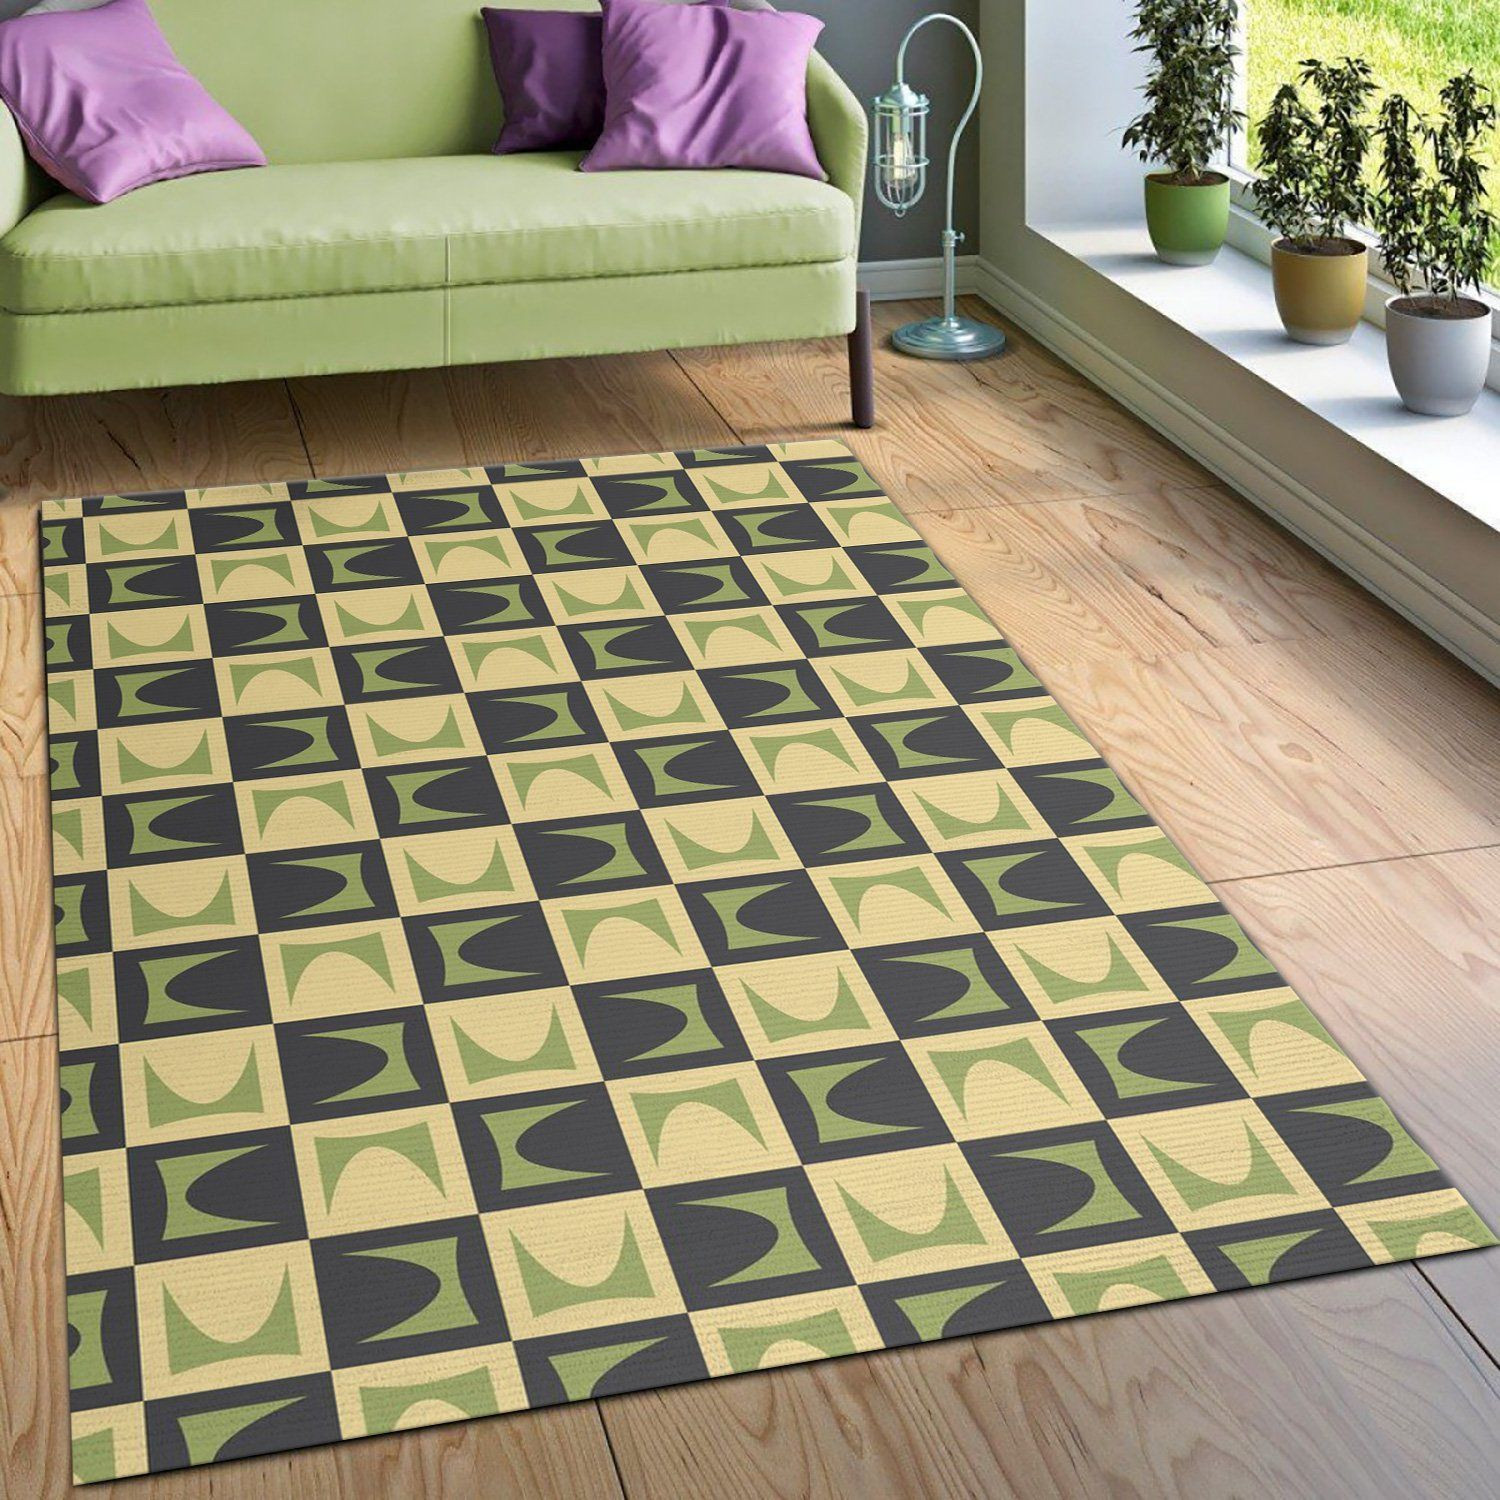 Midcentury Pattern 30 Area Rug Carpet, Living room and bedroom Rug, Home Decor Floor Decor - Indoor Outdoor Rugs